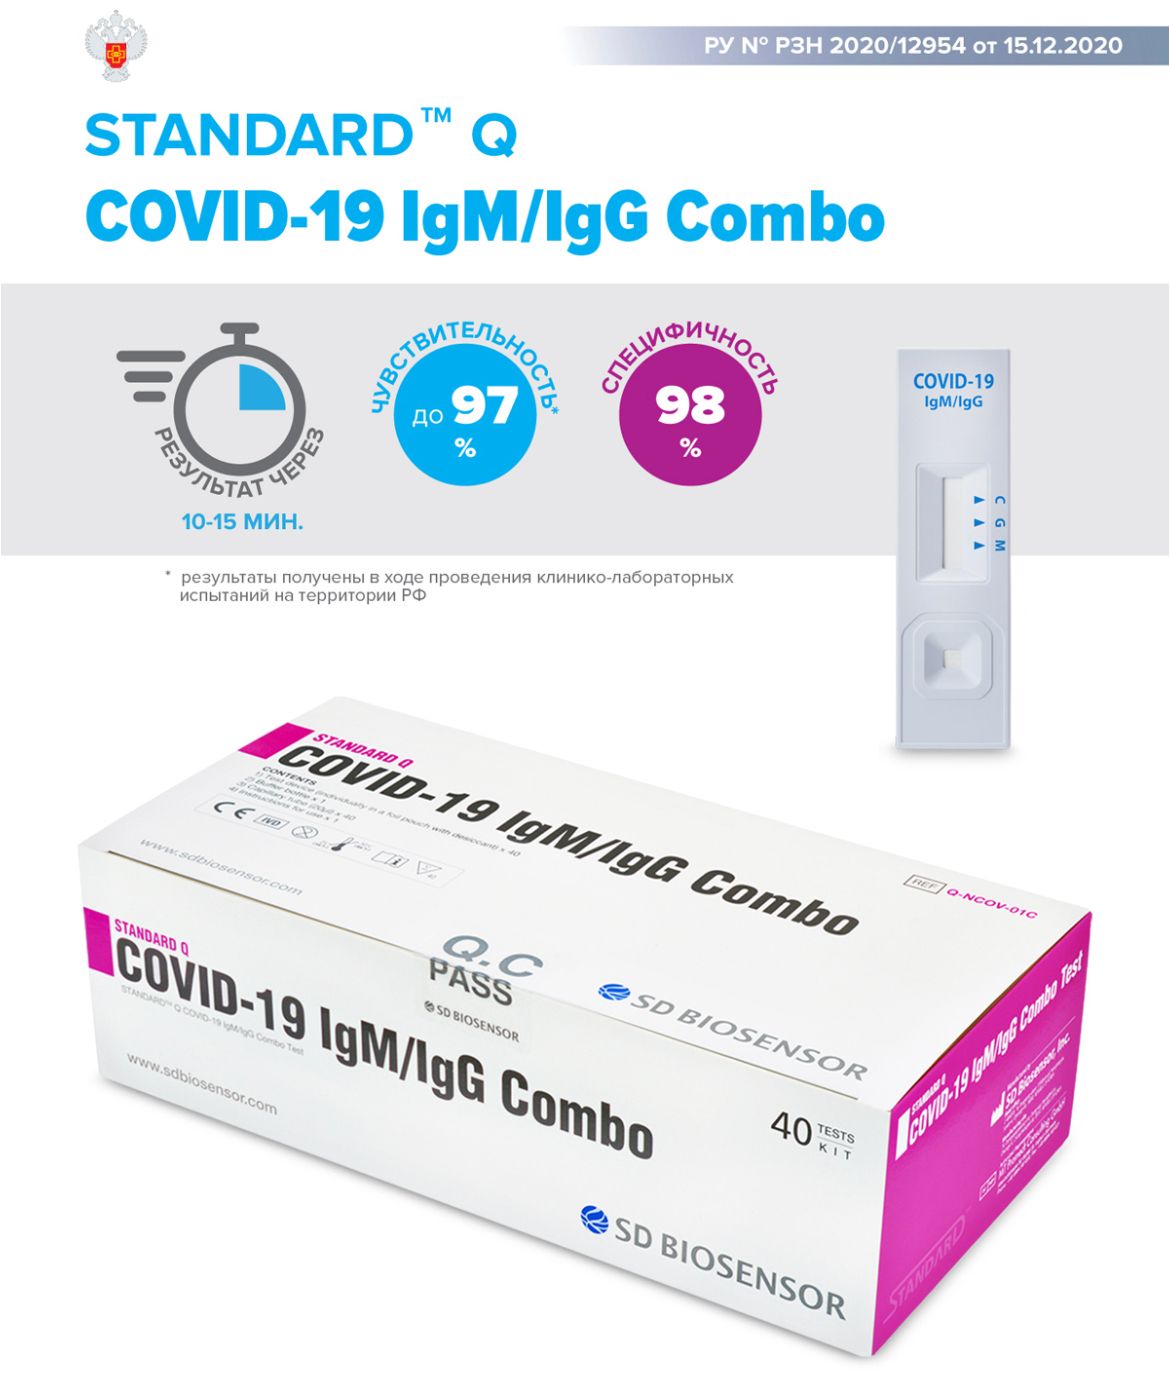 Standard Q COVID-19 IgM/IgG Combo